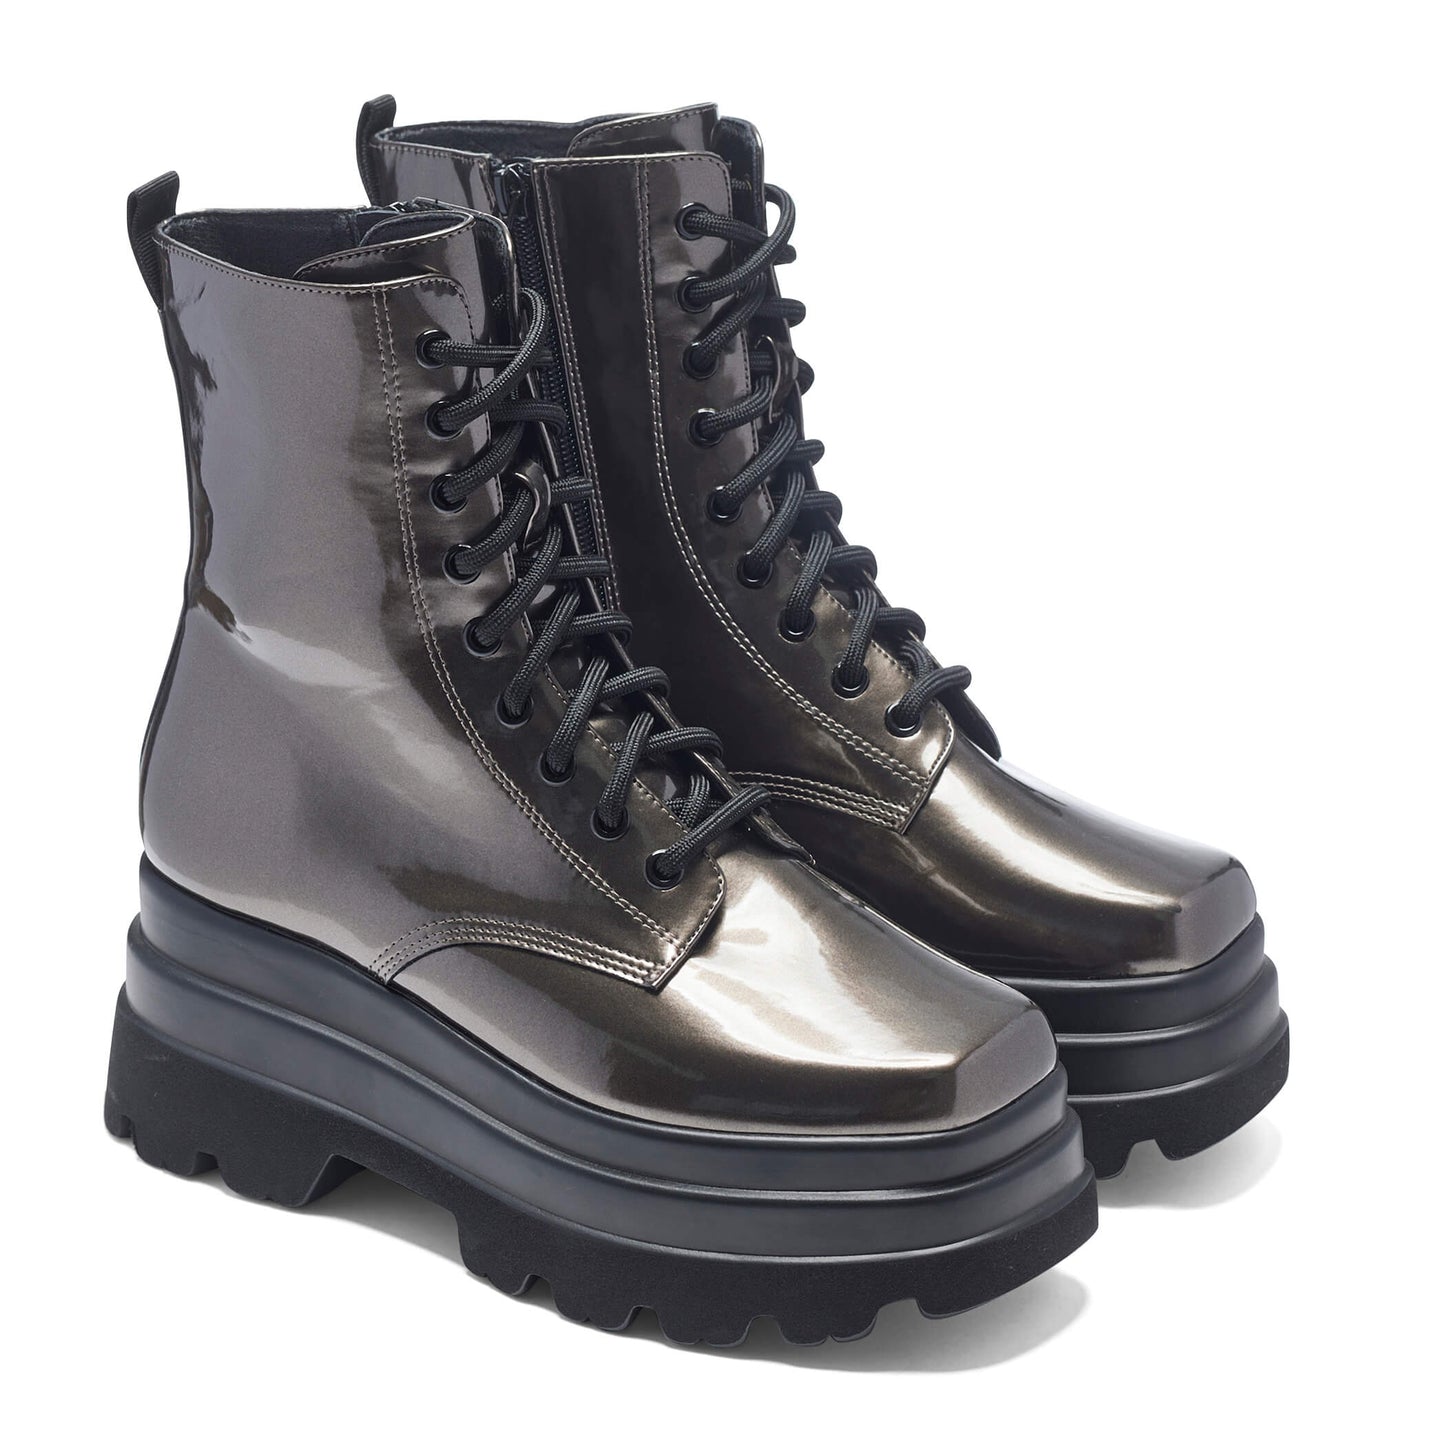 Deathwatch Trident Platform Boots - Static Grey - KOI Footwear - Three-Quarter View